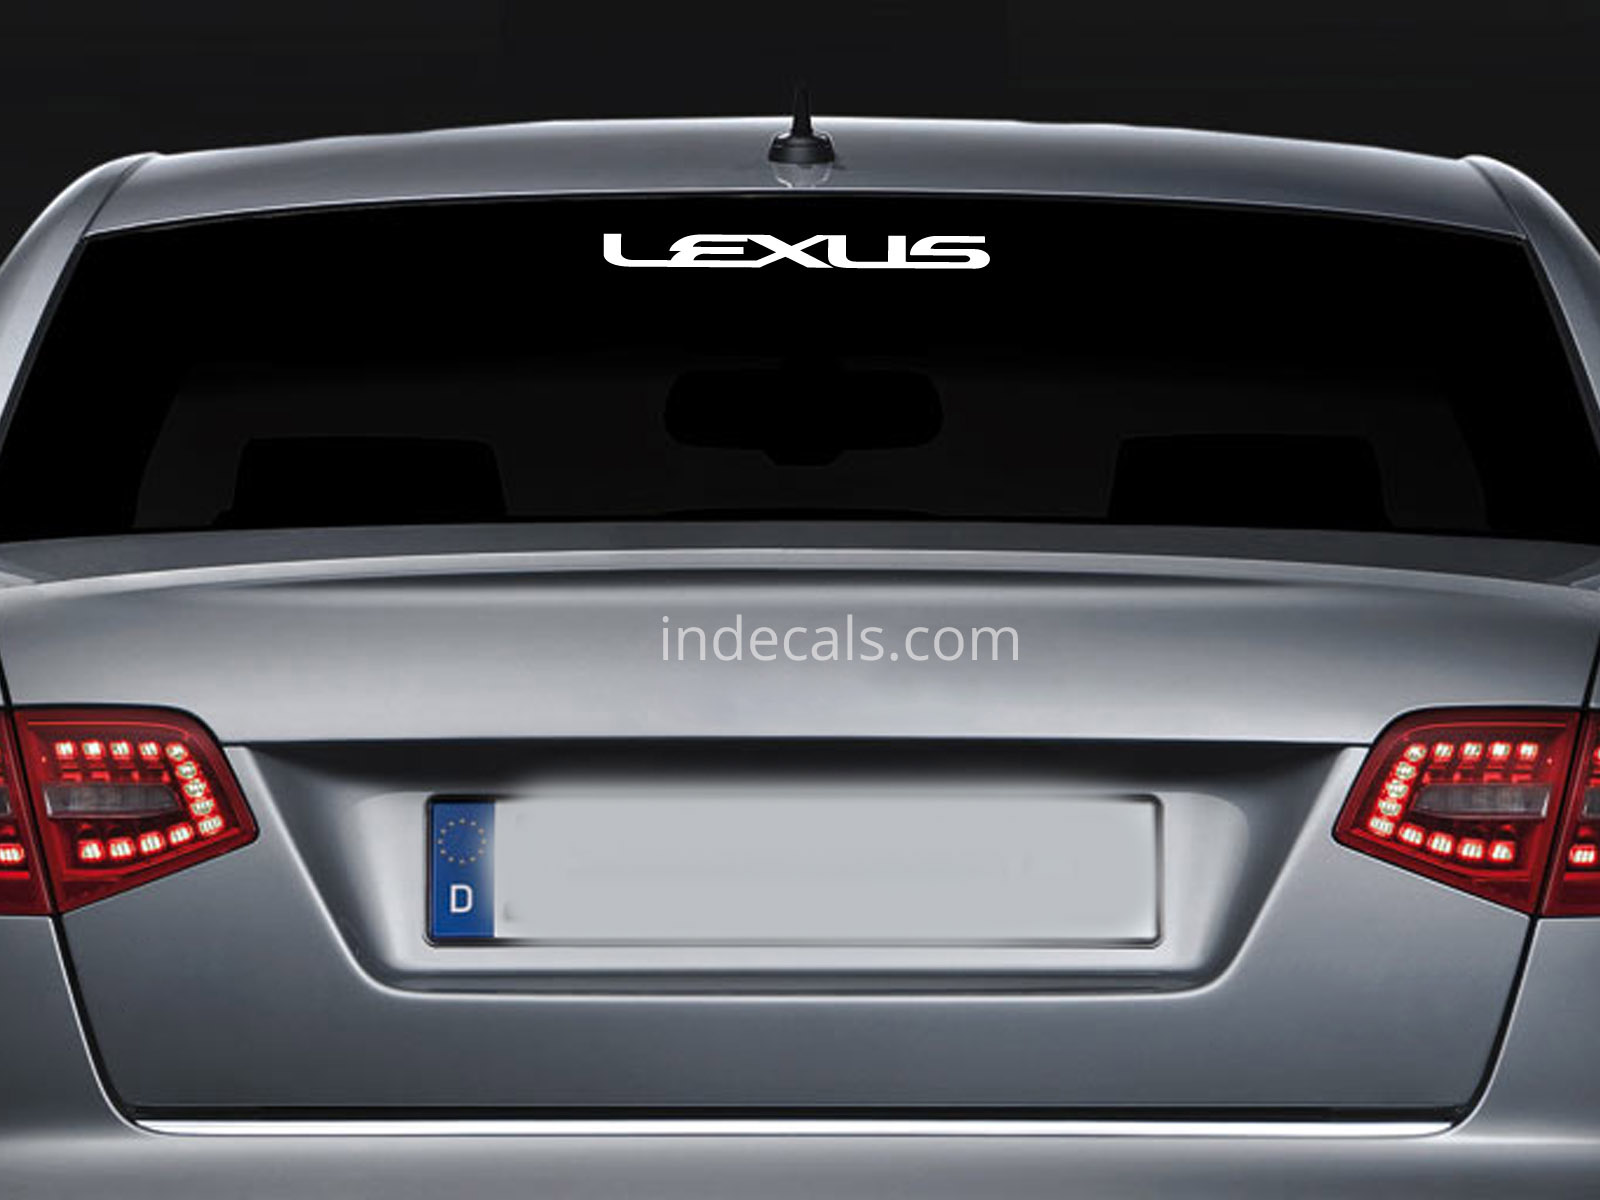 1 x Lexus Sticker for Windshield or Back Window - White